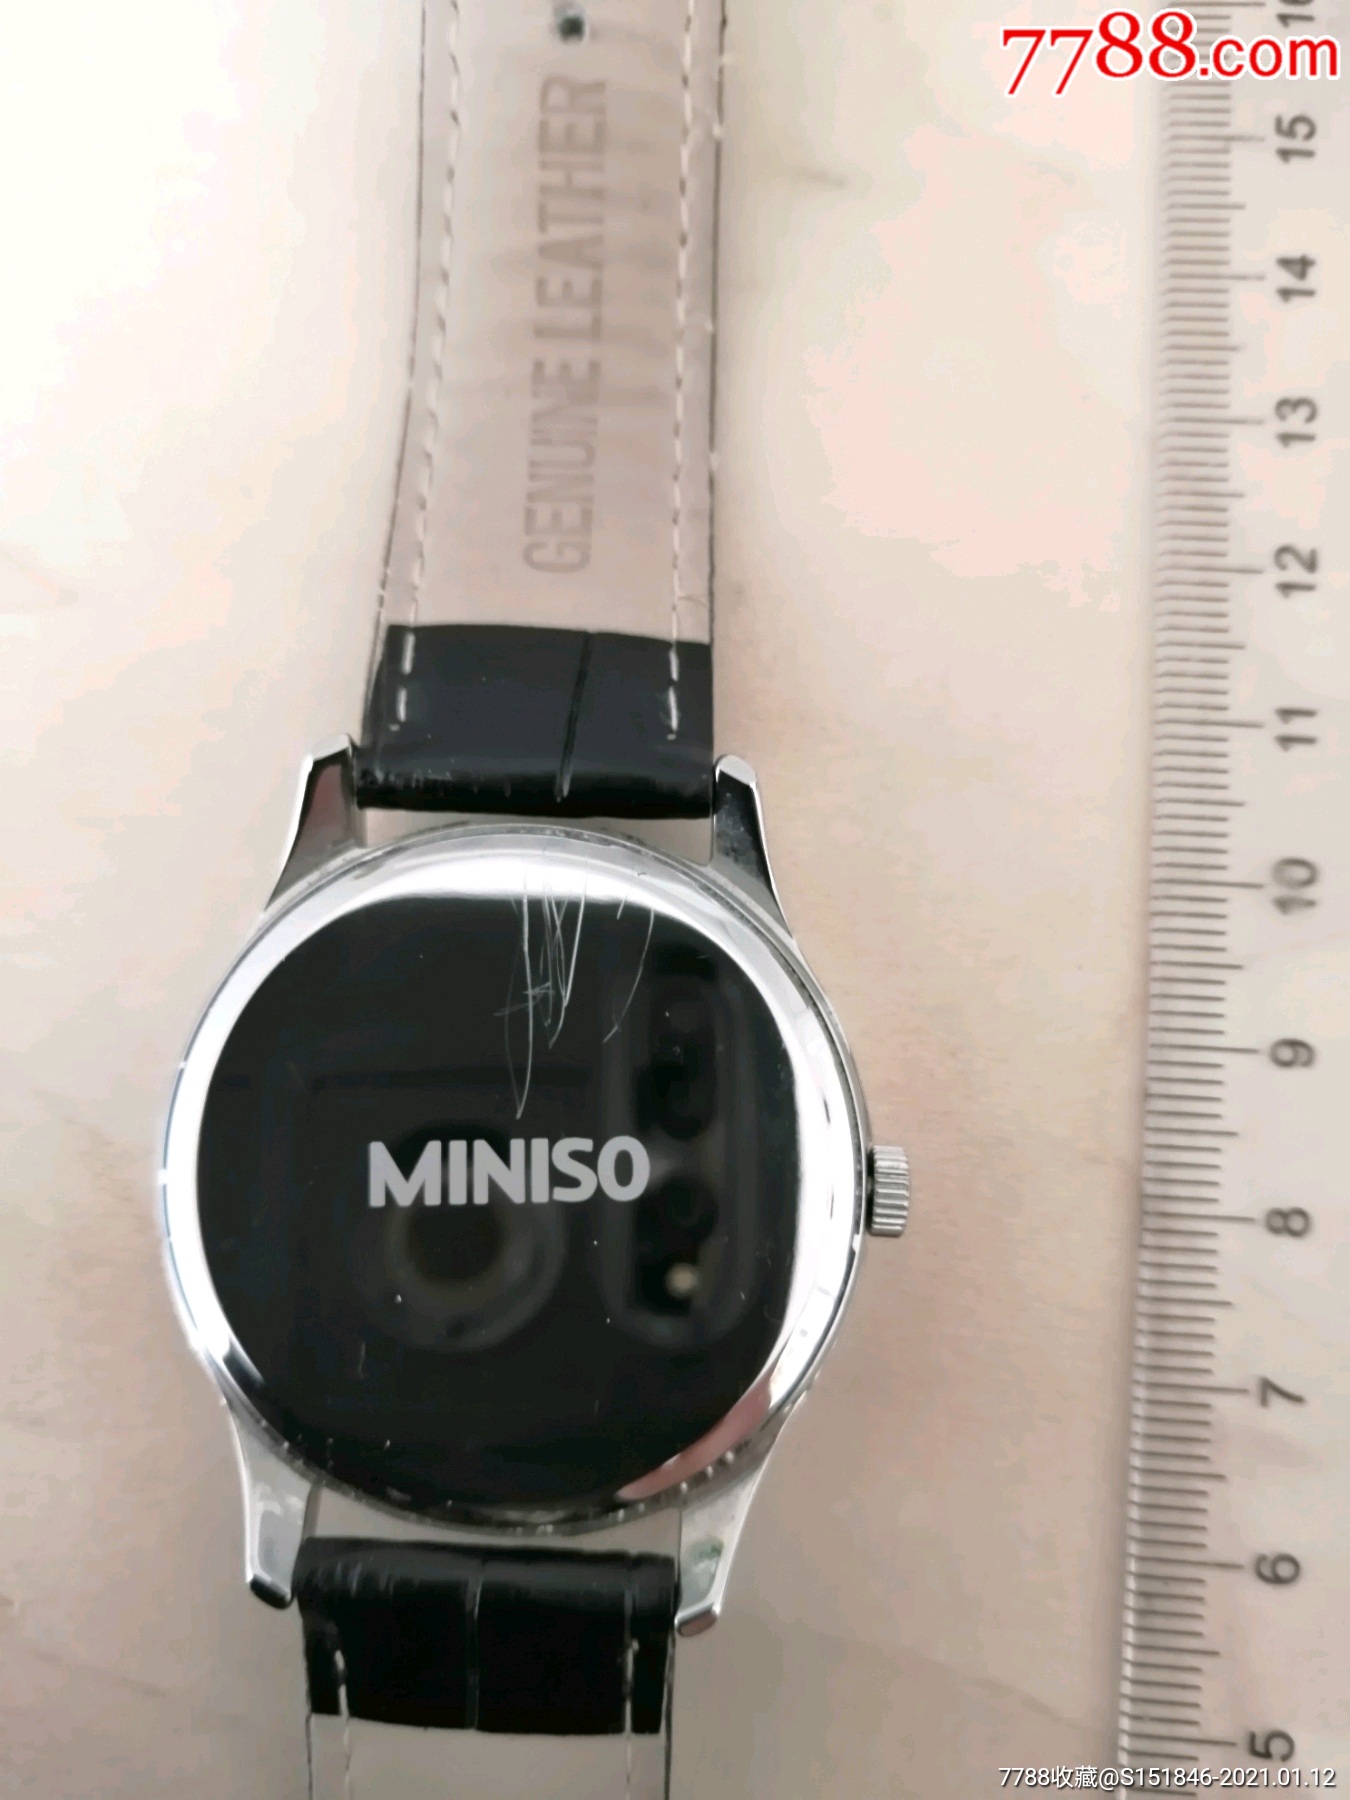 miniso名创优品,2017年产,电池石英手表一只,运行功能完好,皮表带,背